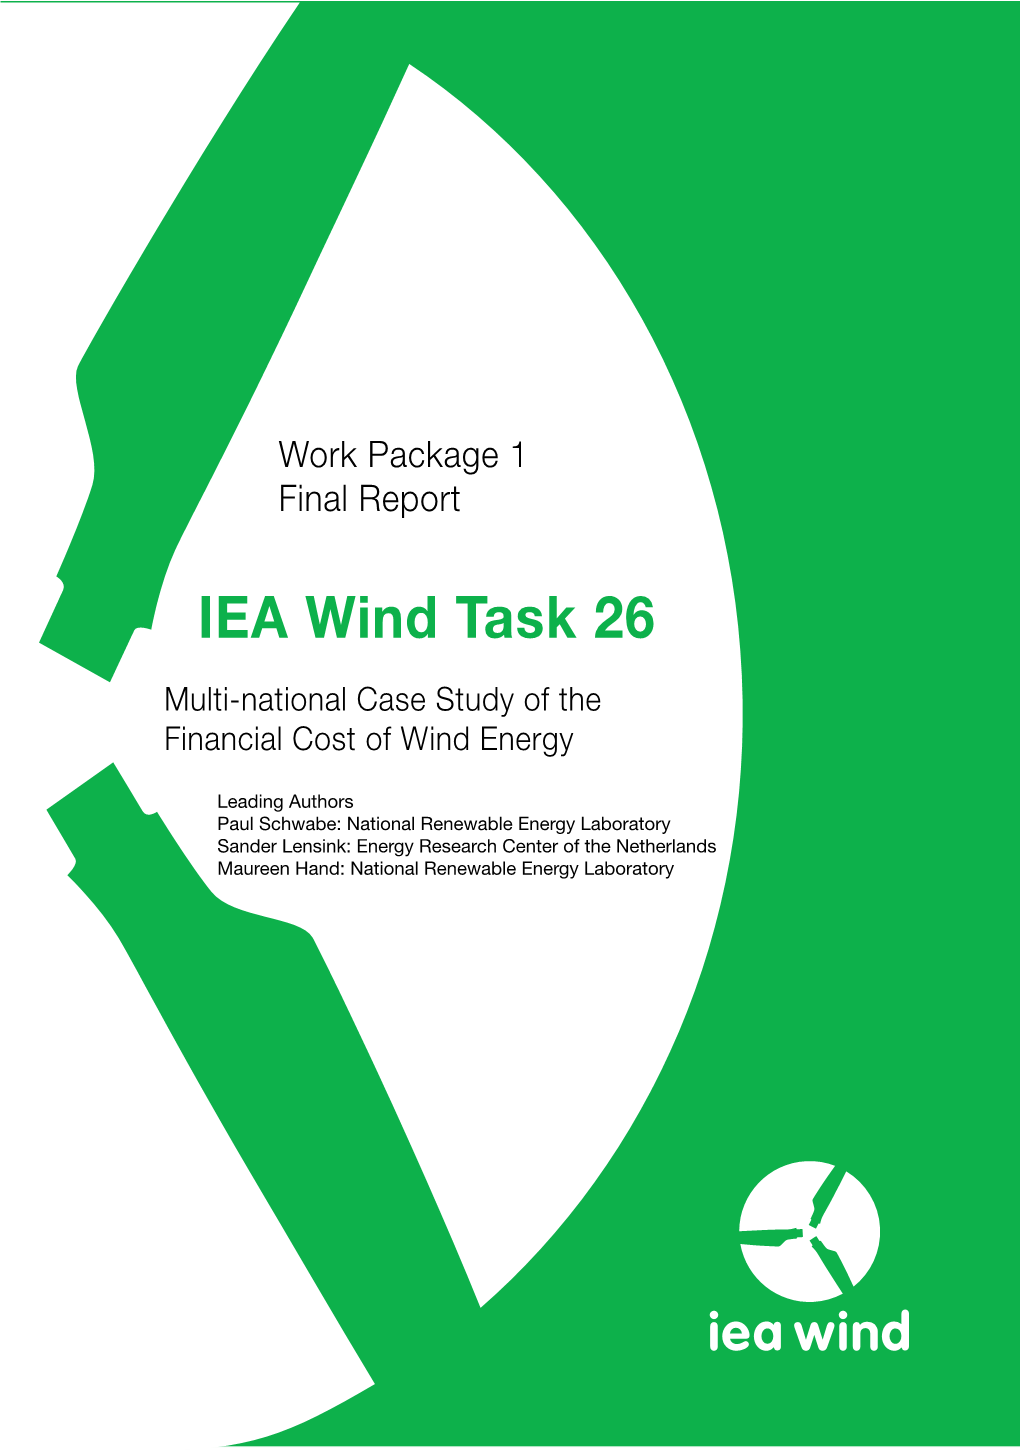 IEA Wind Task 26